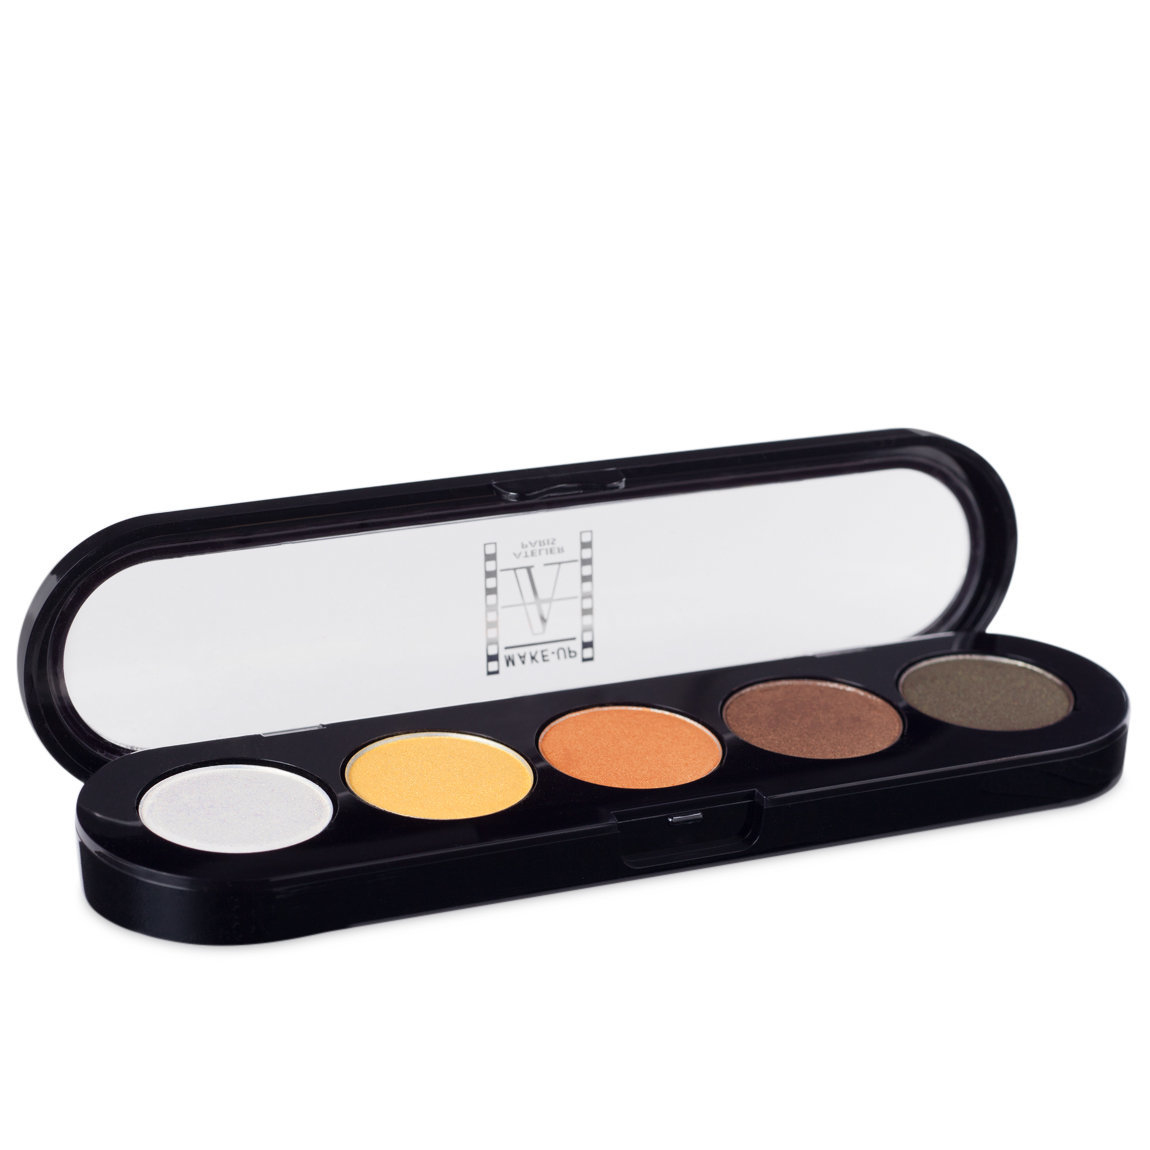 5 Eyeshadow Palette – T14 Golden Tones